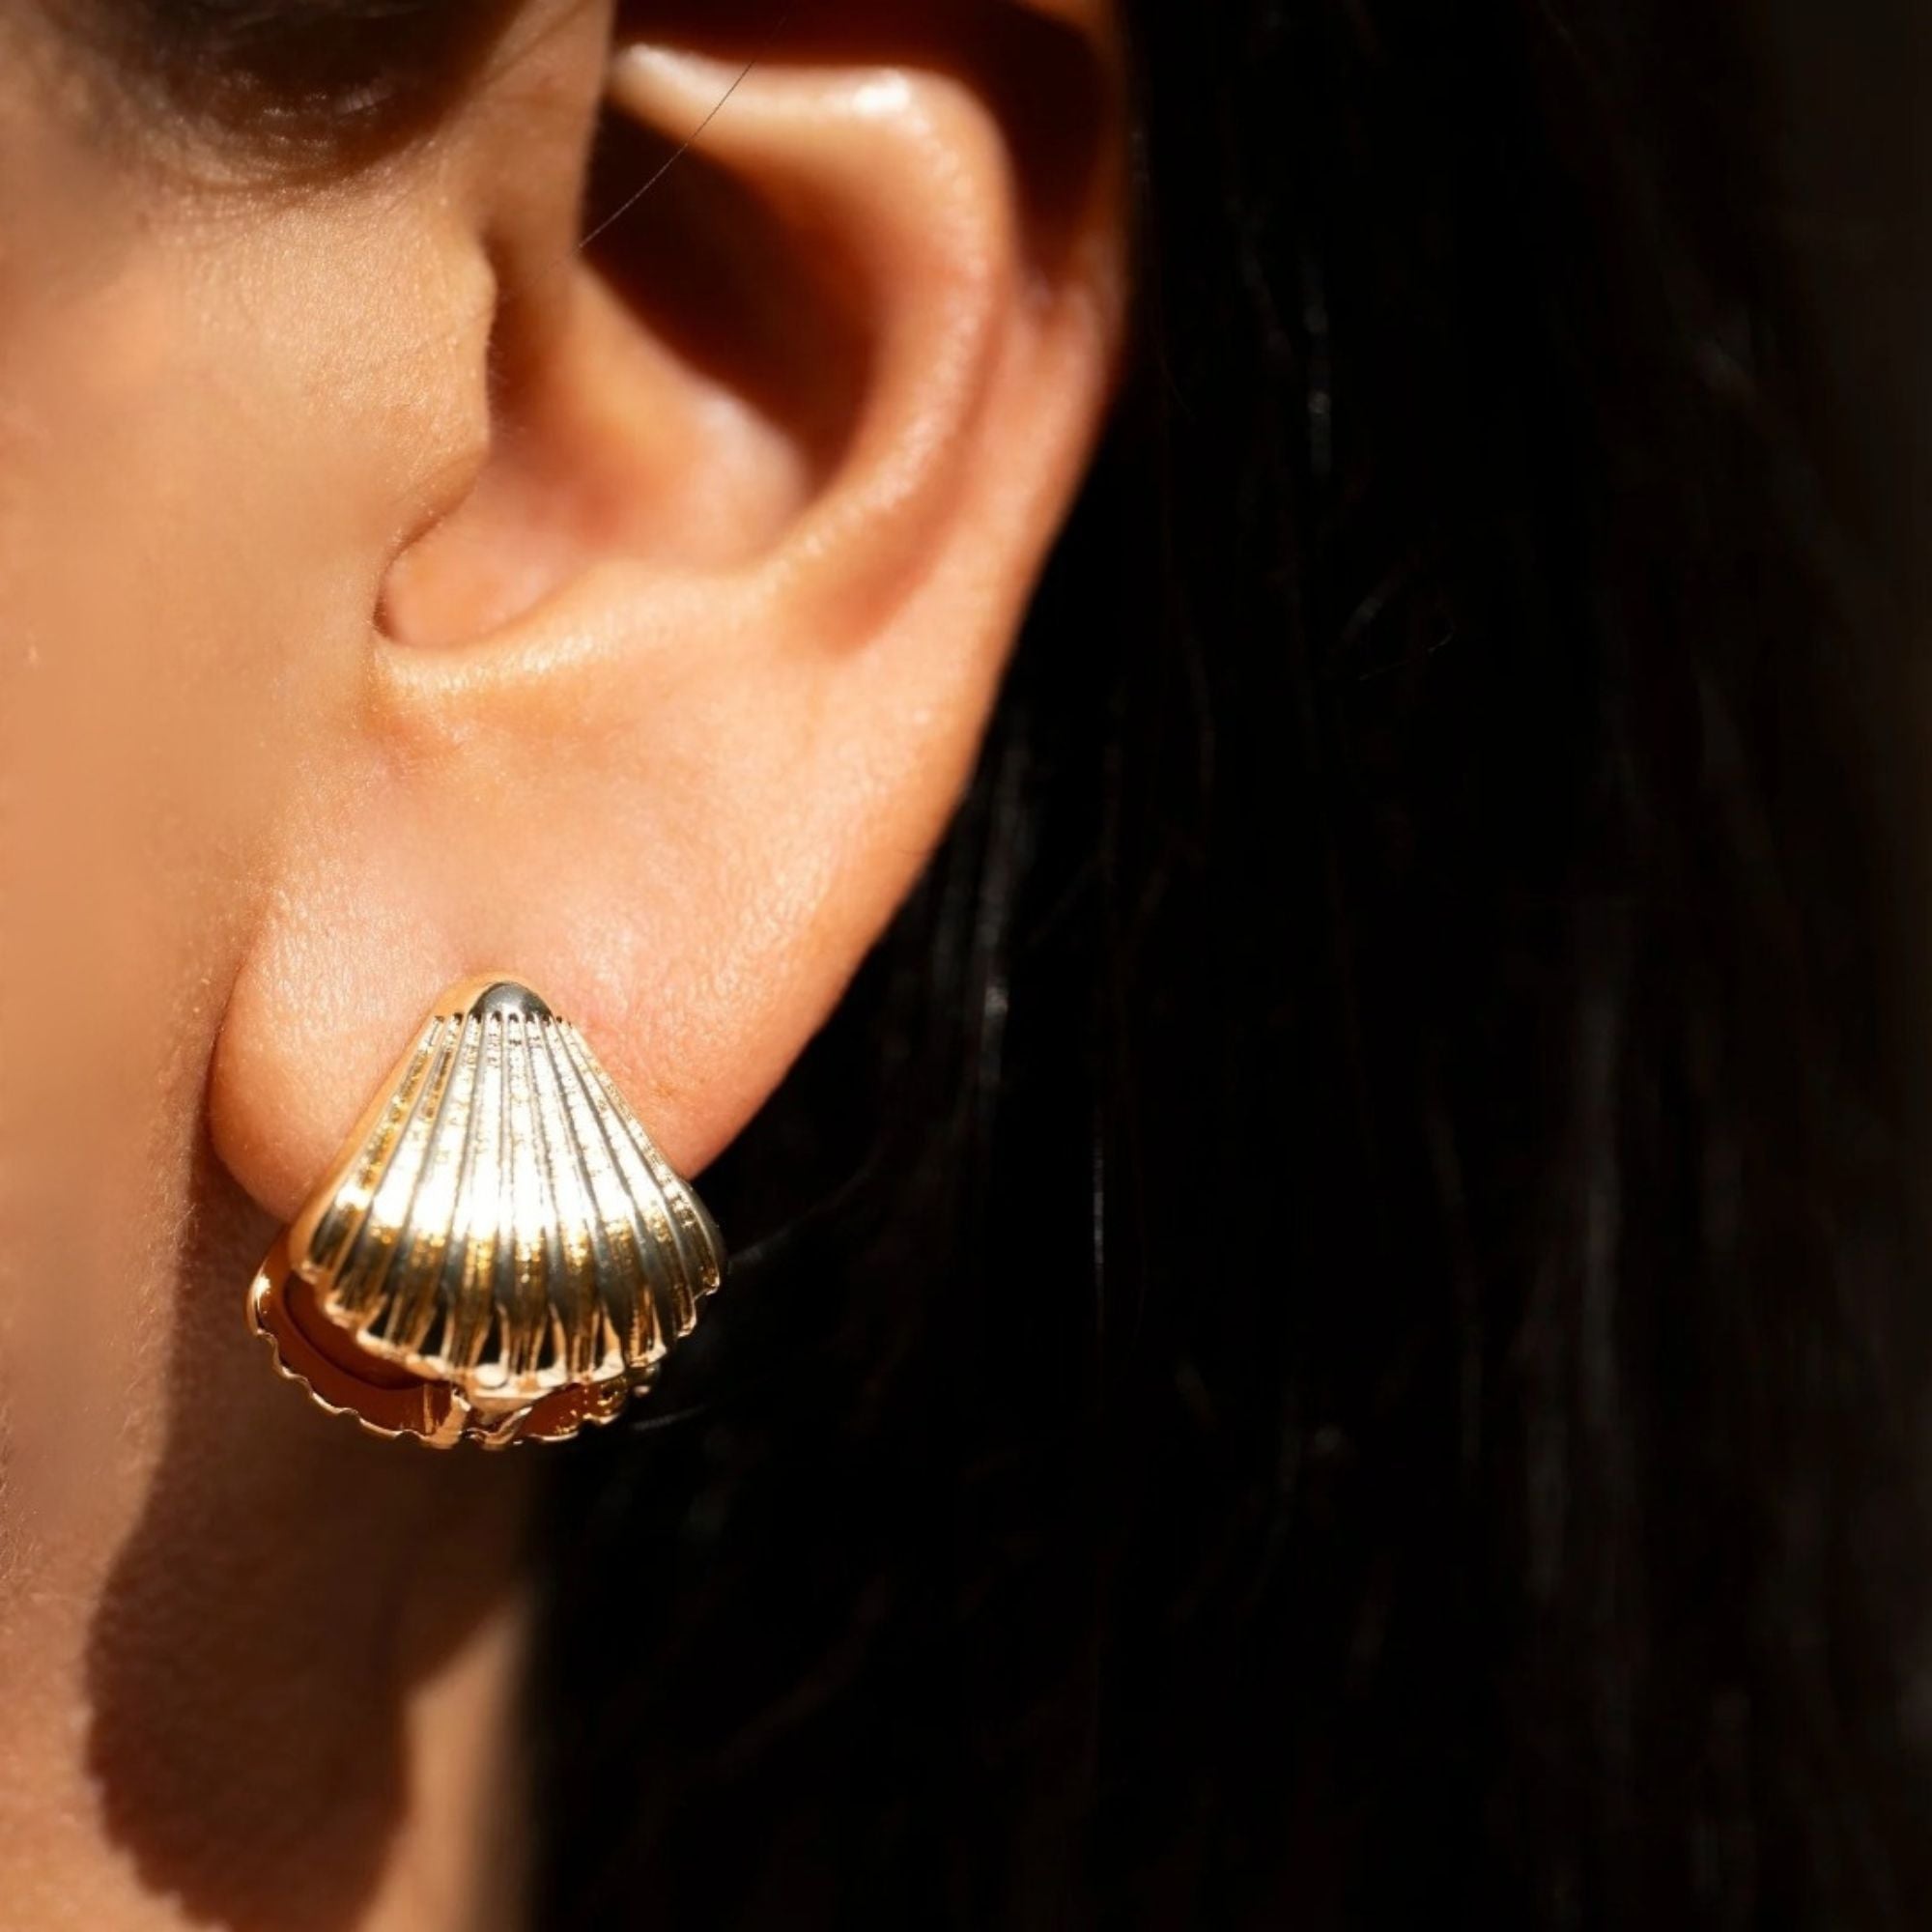 Gold seashell earrings